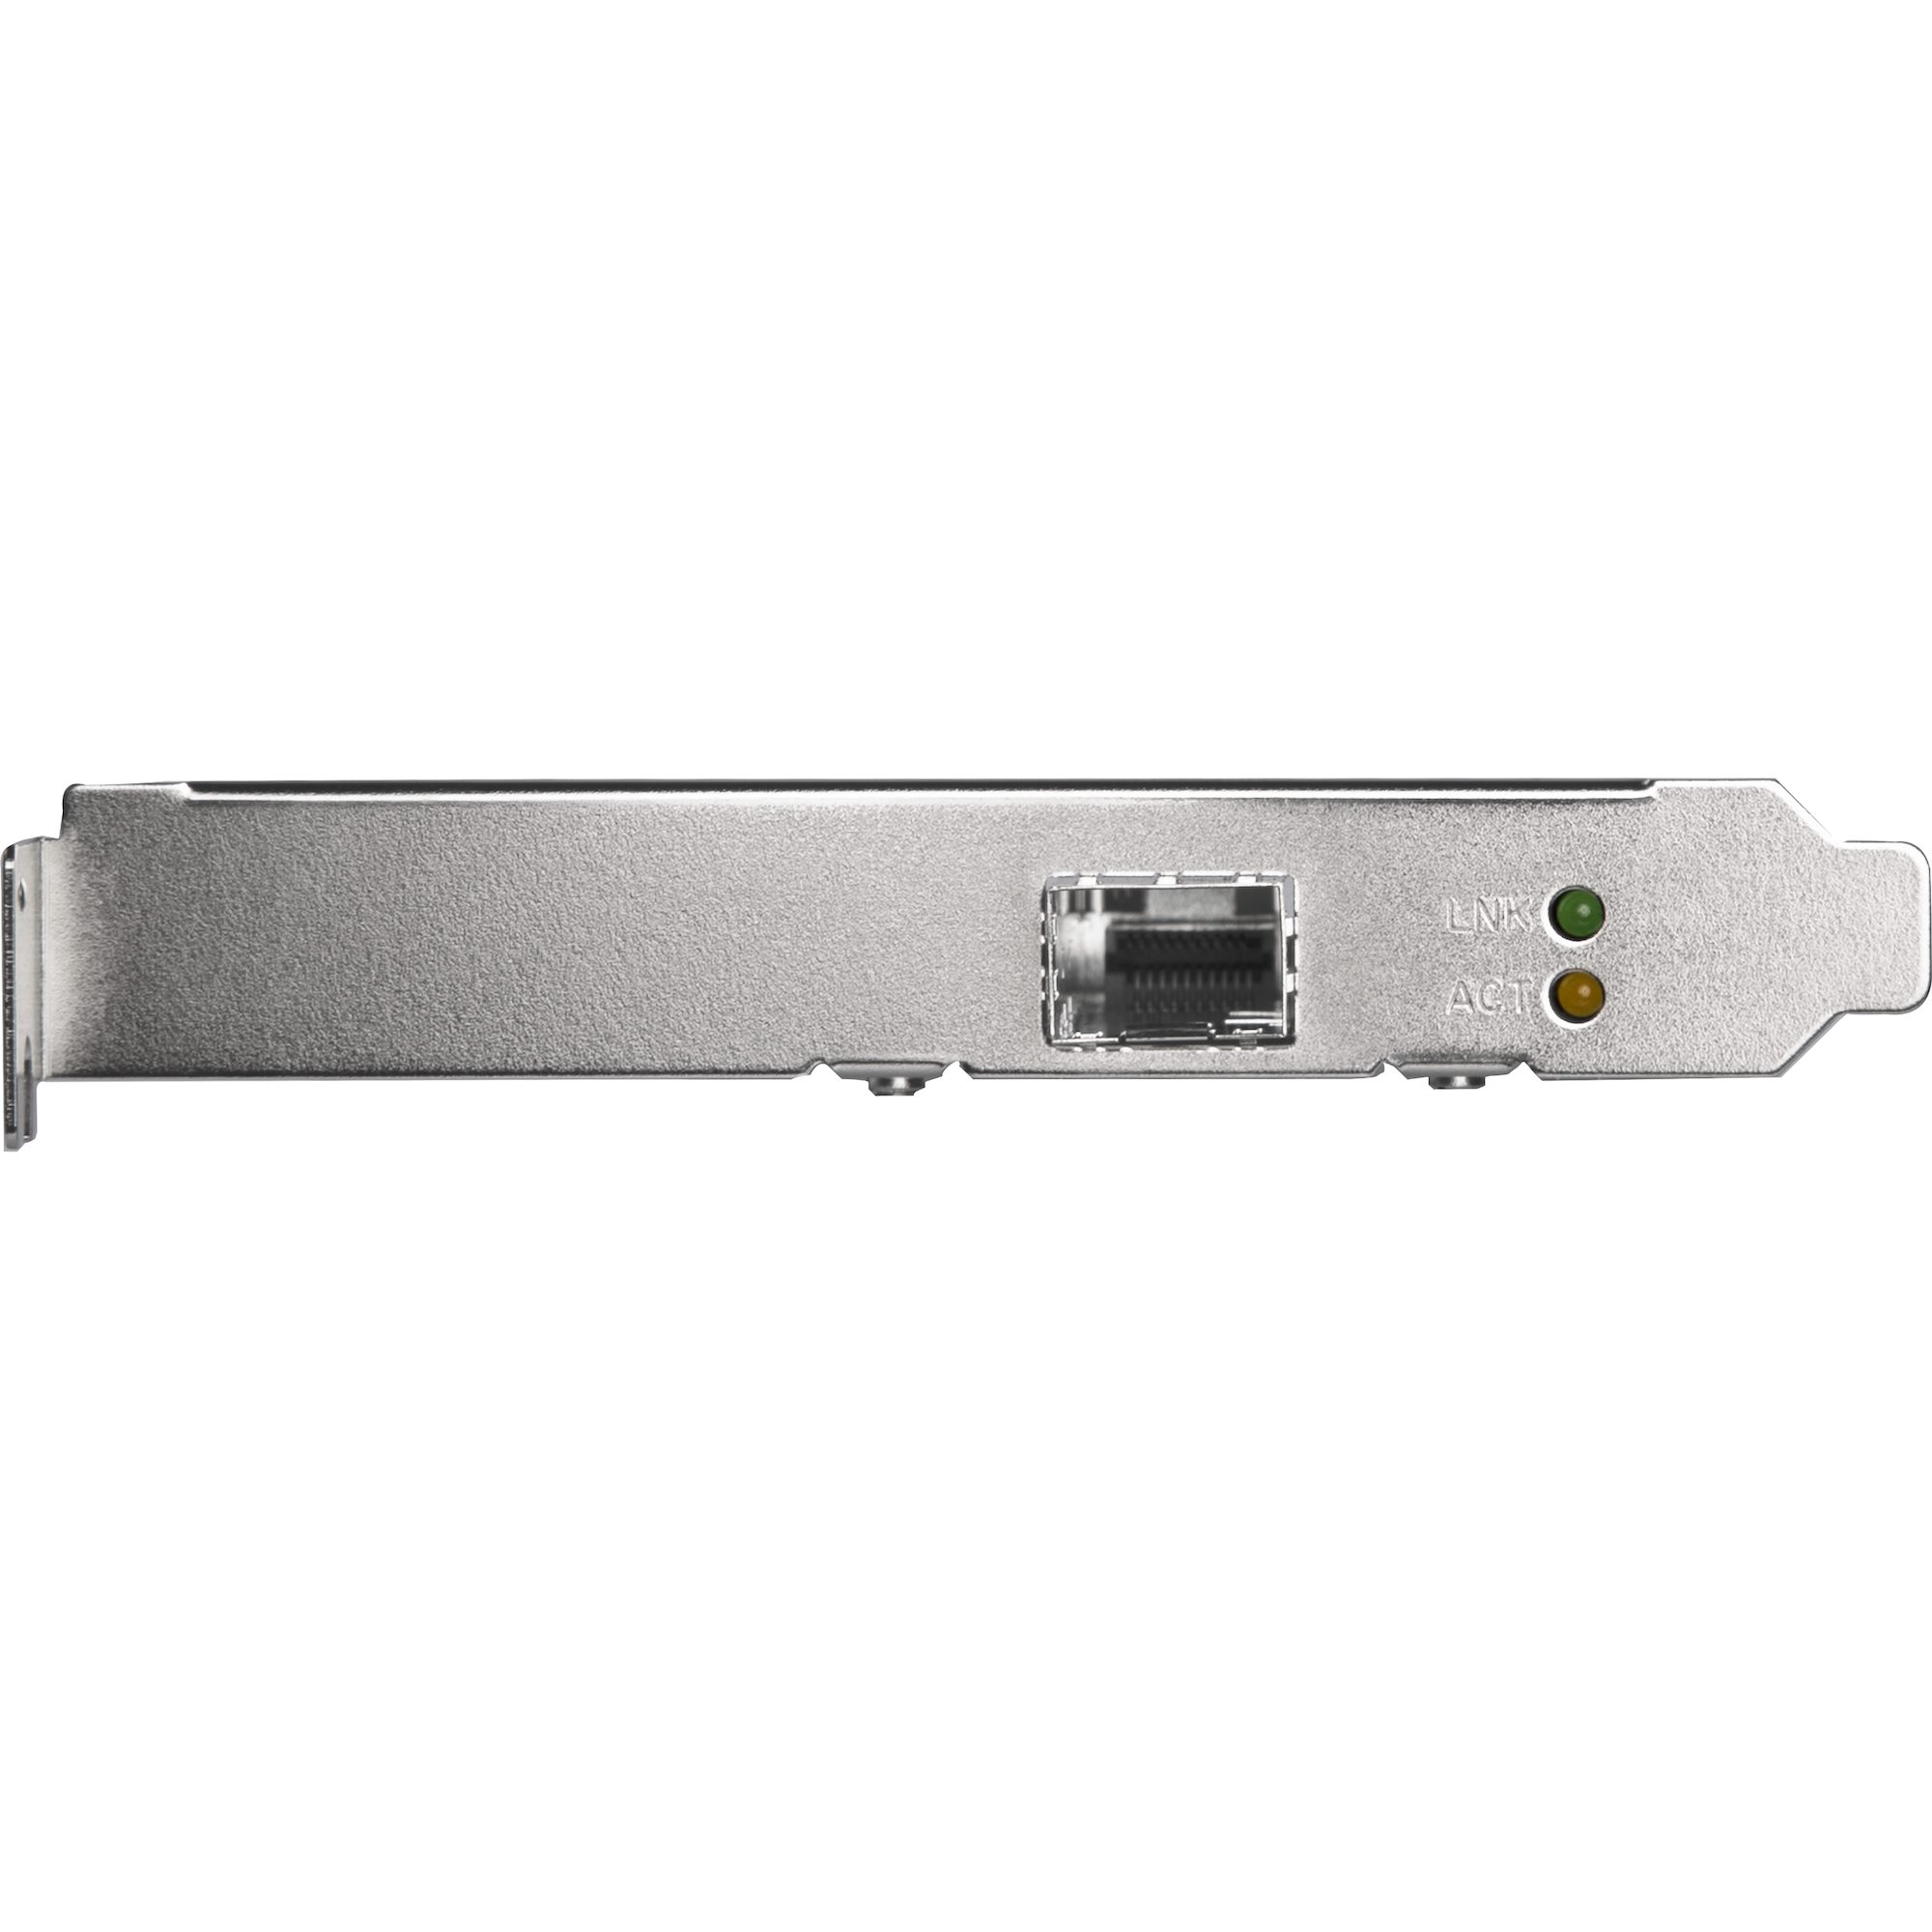 PCI Express Gigabit Ethernet Fiber Network Card w/ Open SFP - PCIe SFP  Network Card Adapter NIC